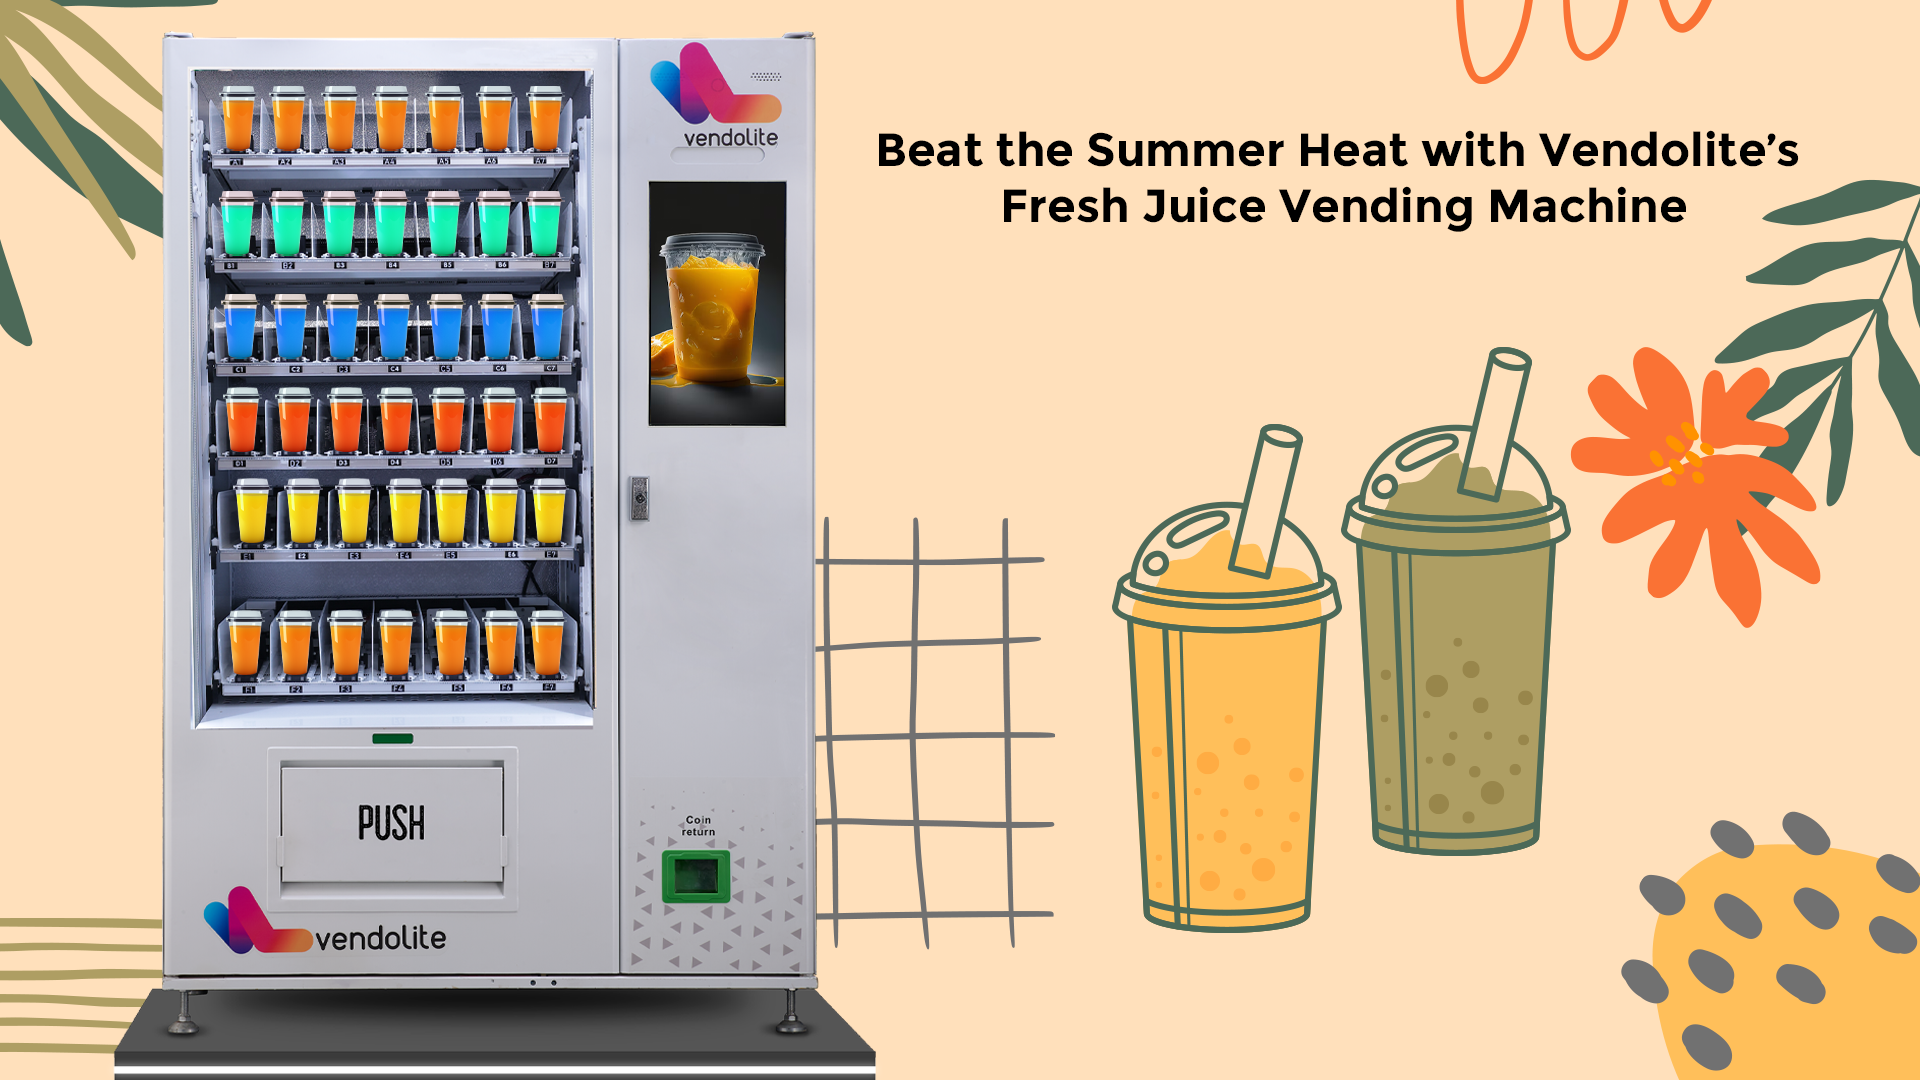 Beat the Summer Heat with Vendolite’s Fresh Juice Vending Machine